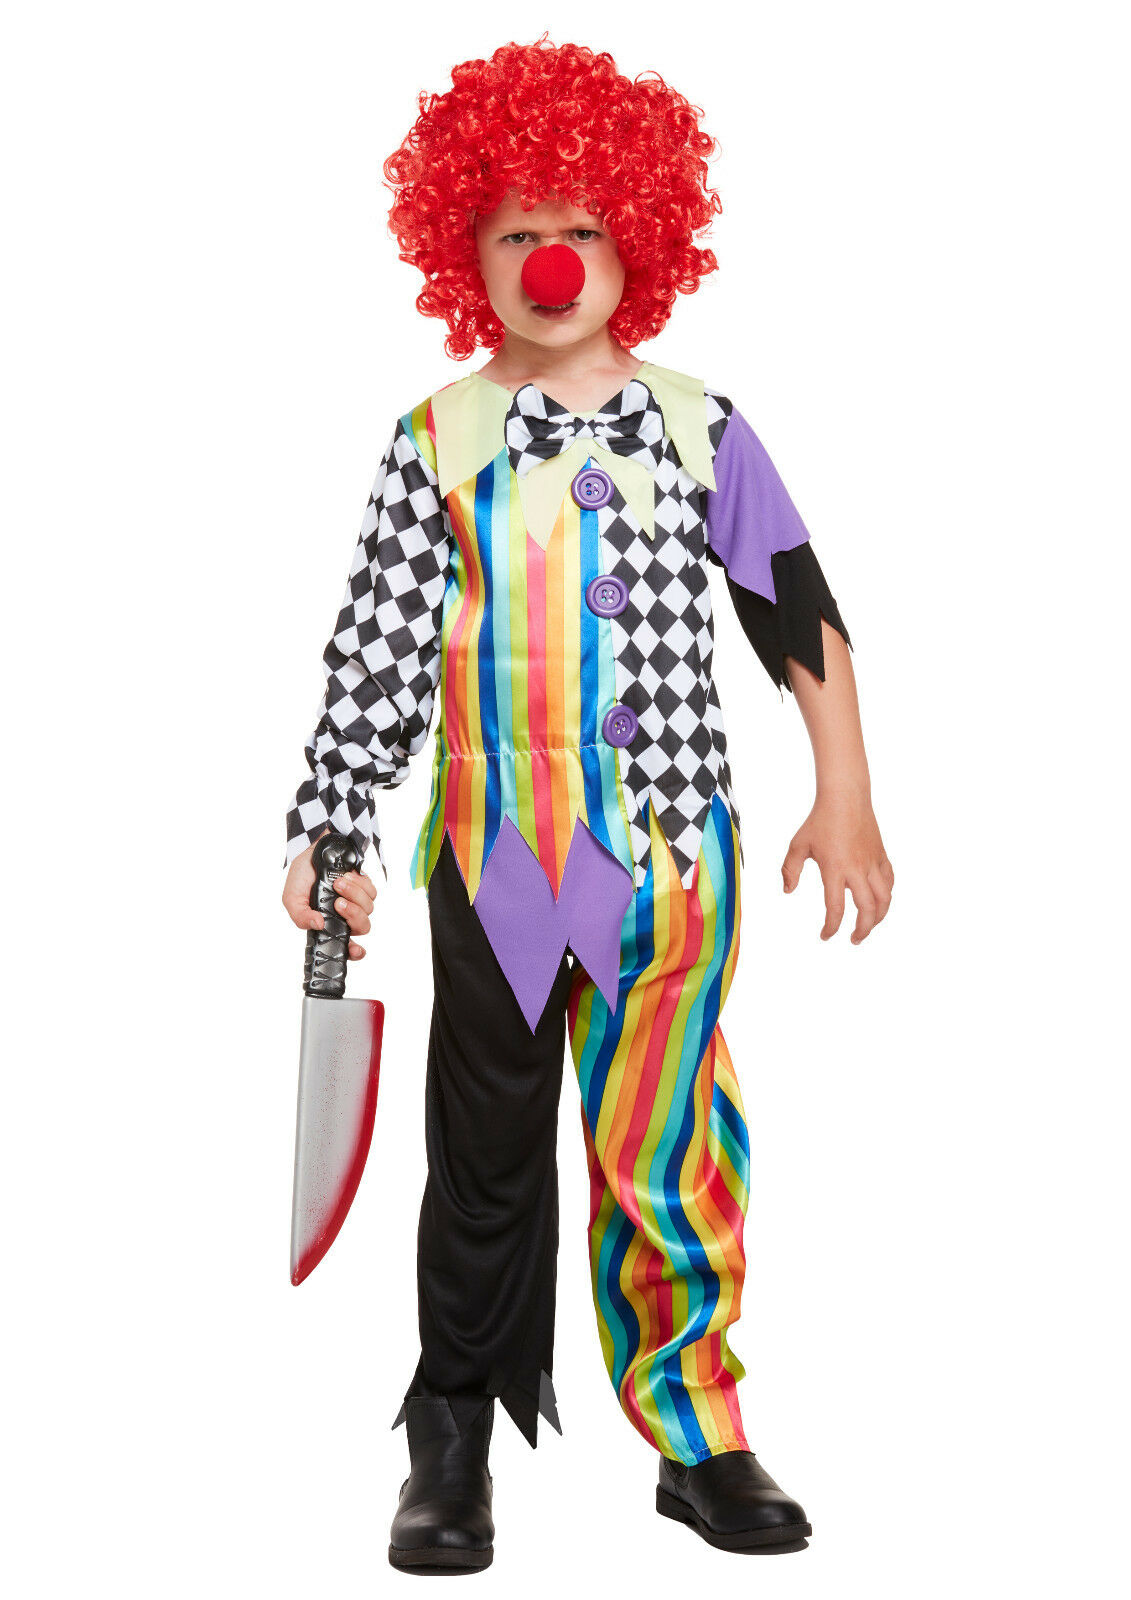 Kids Scary Clown Costume